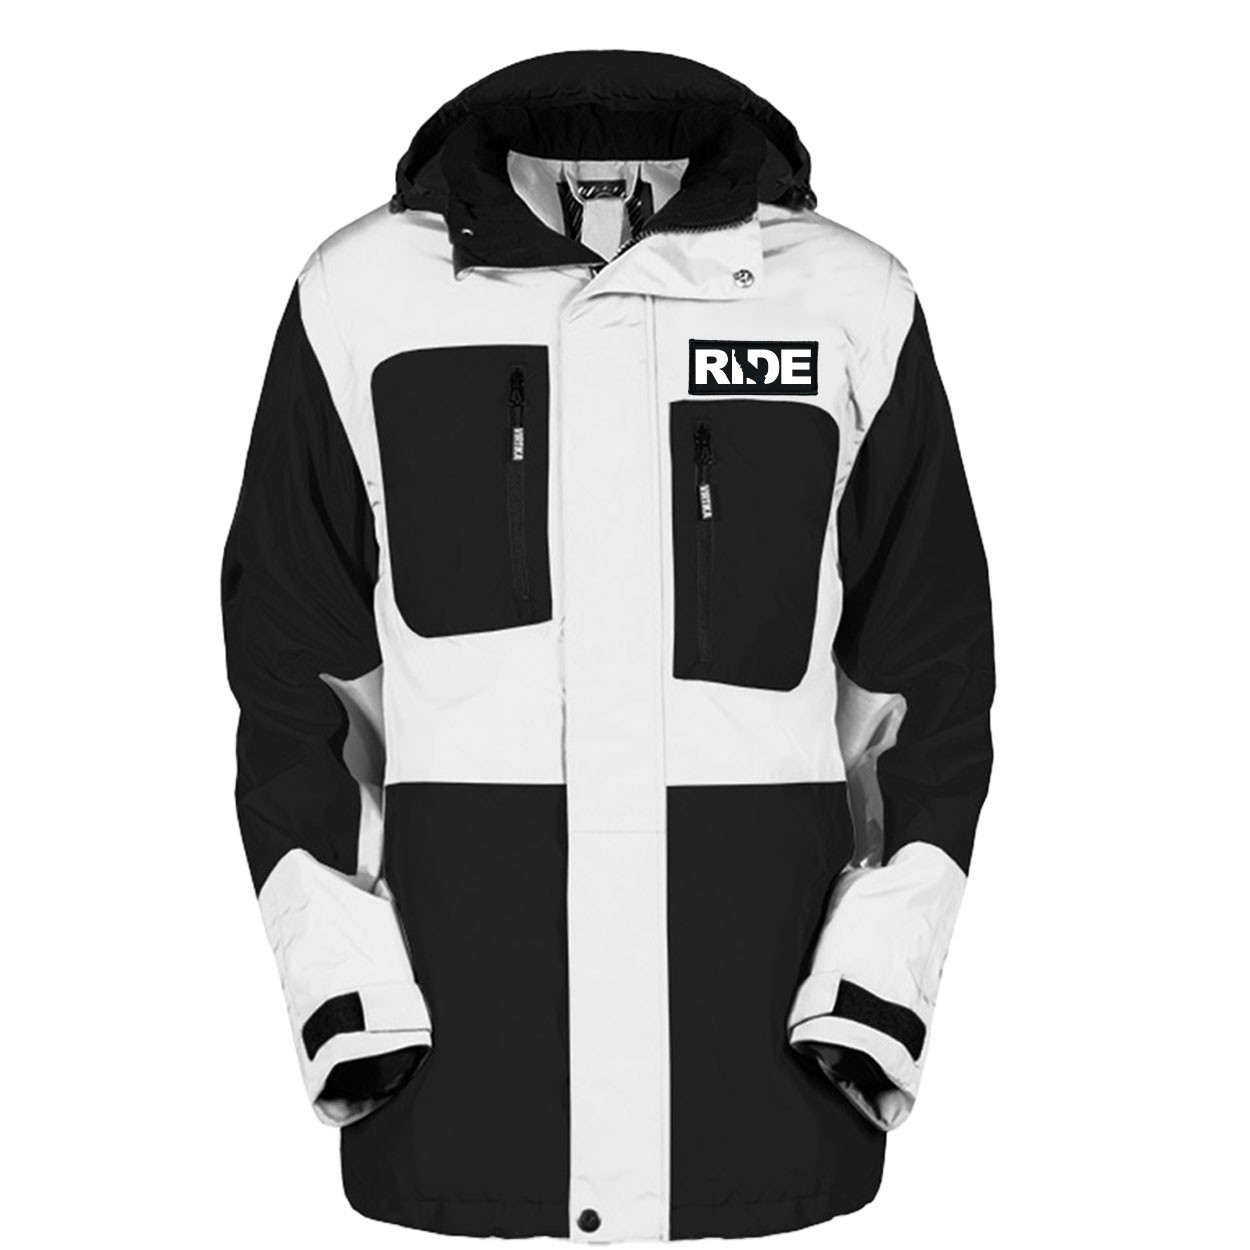 Ride California Pro Waterproof Breathable Winter Virtika Jacket Black/White (White Logo)